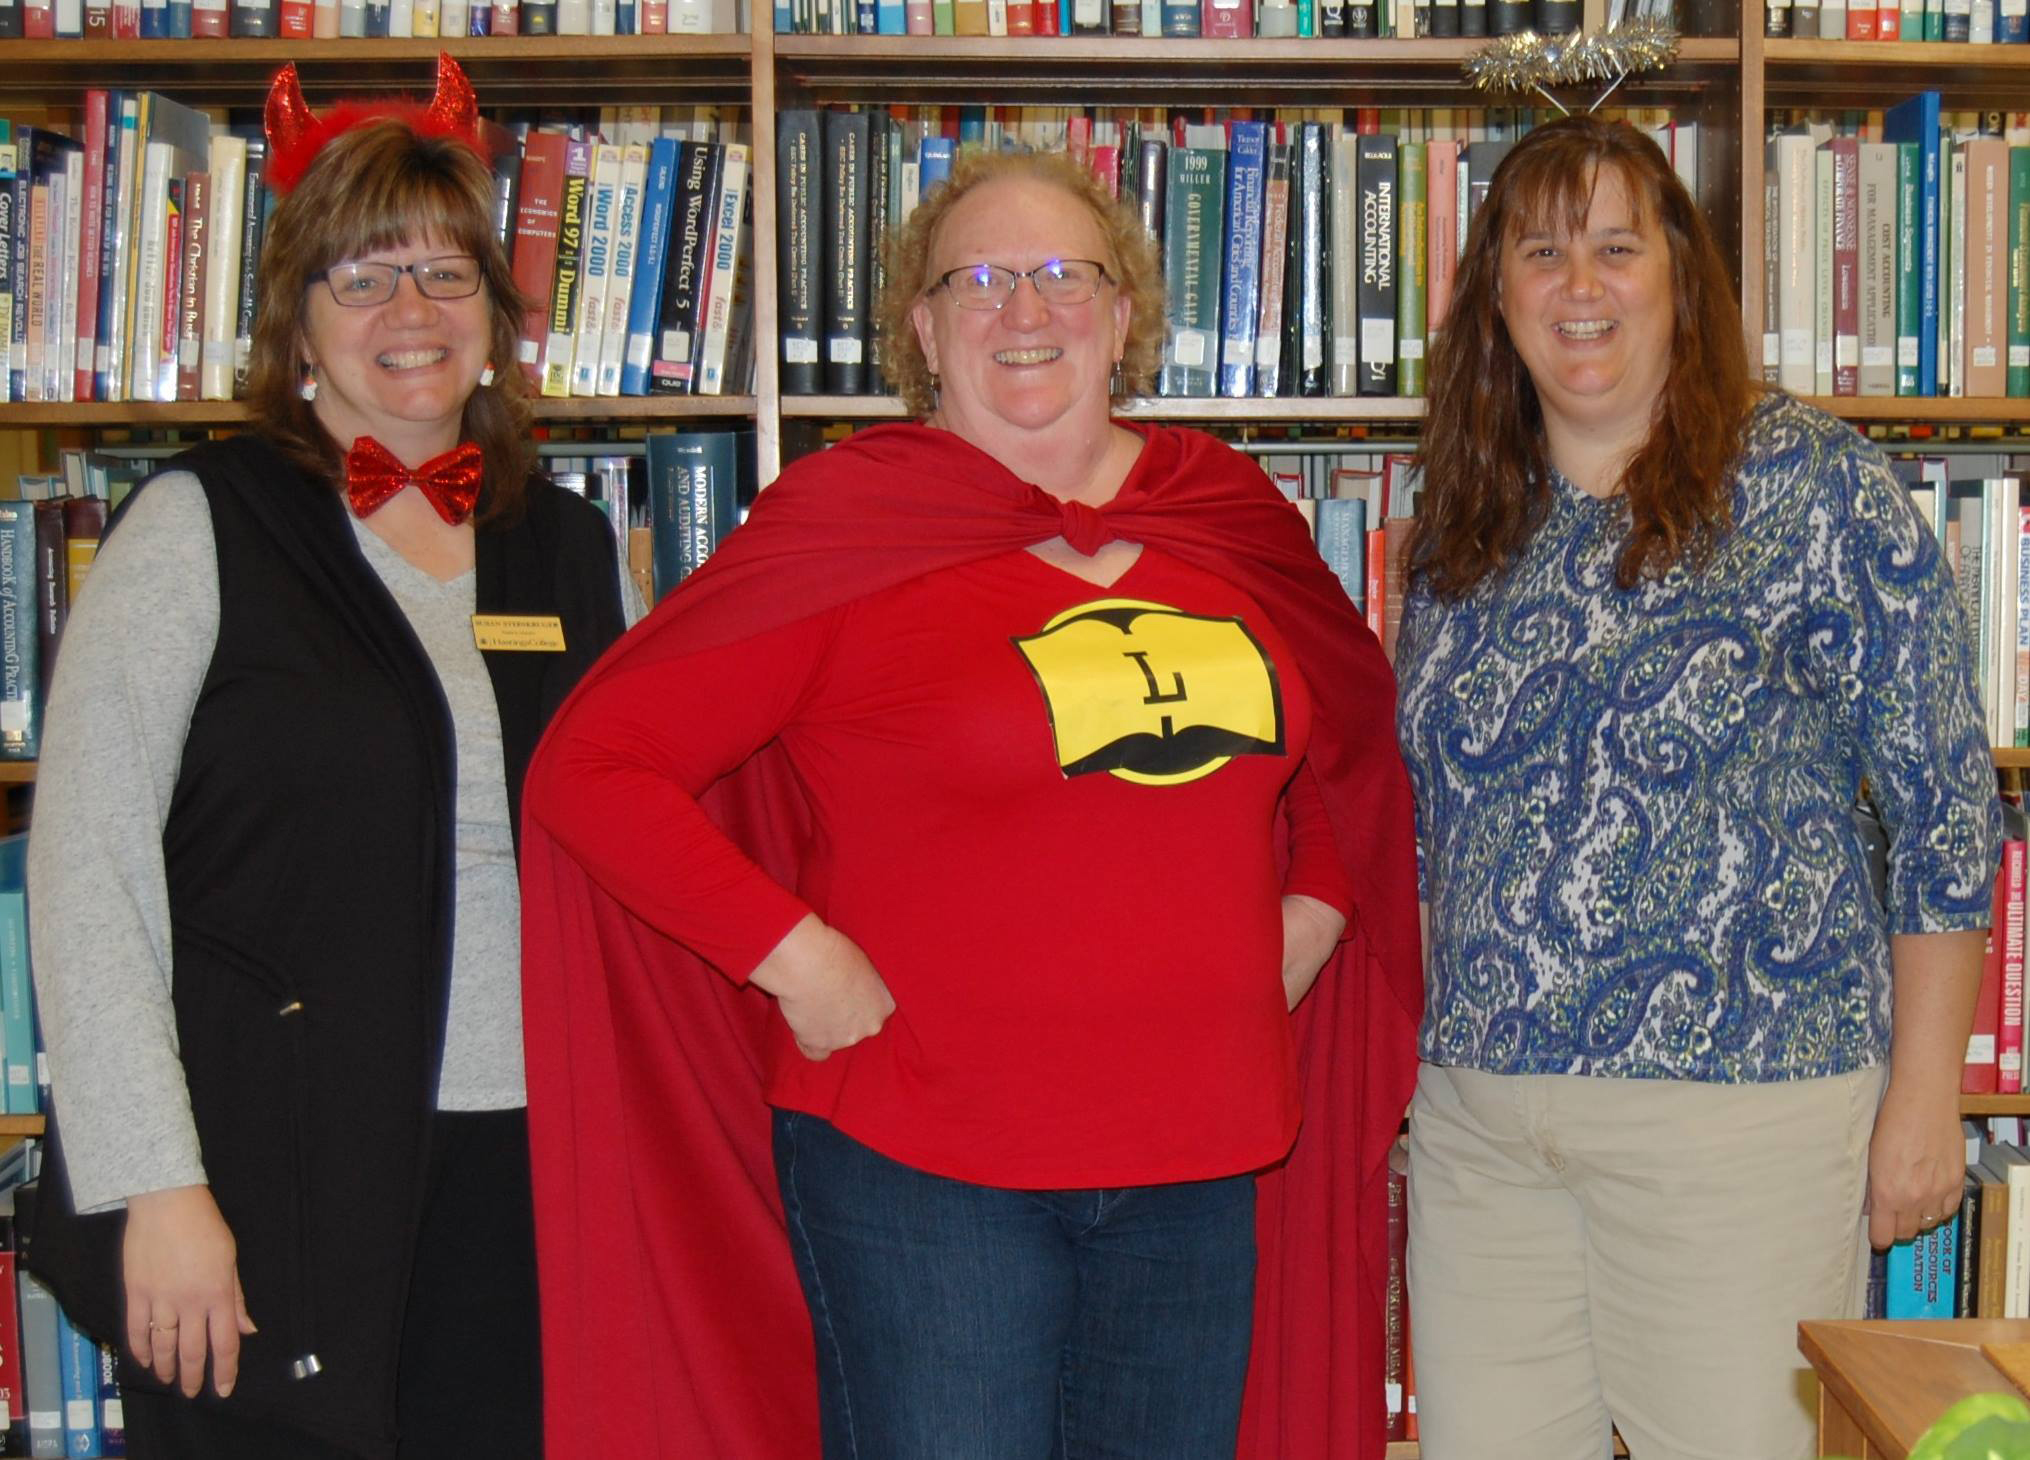 Hastings College Perkins Library staff members, Susan Steinkrueger, Pam Bohmfalk, and Alanna Armstrong. Halloween, 2017.